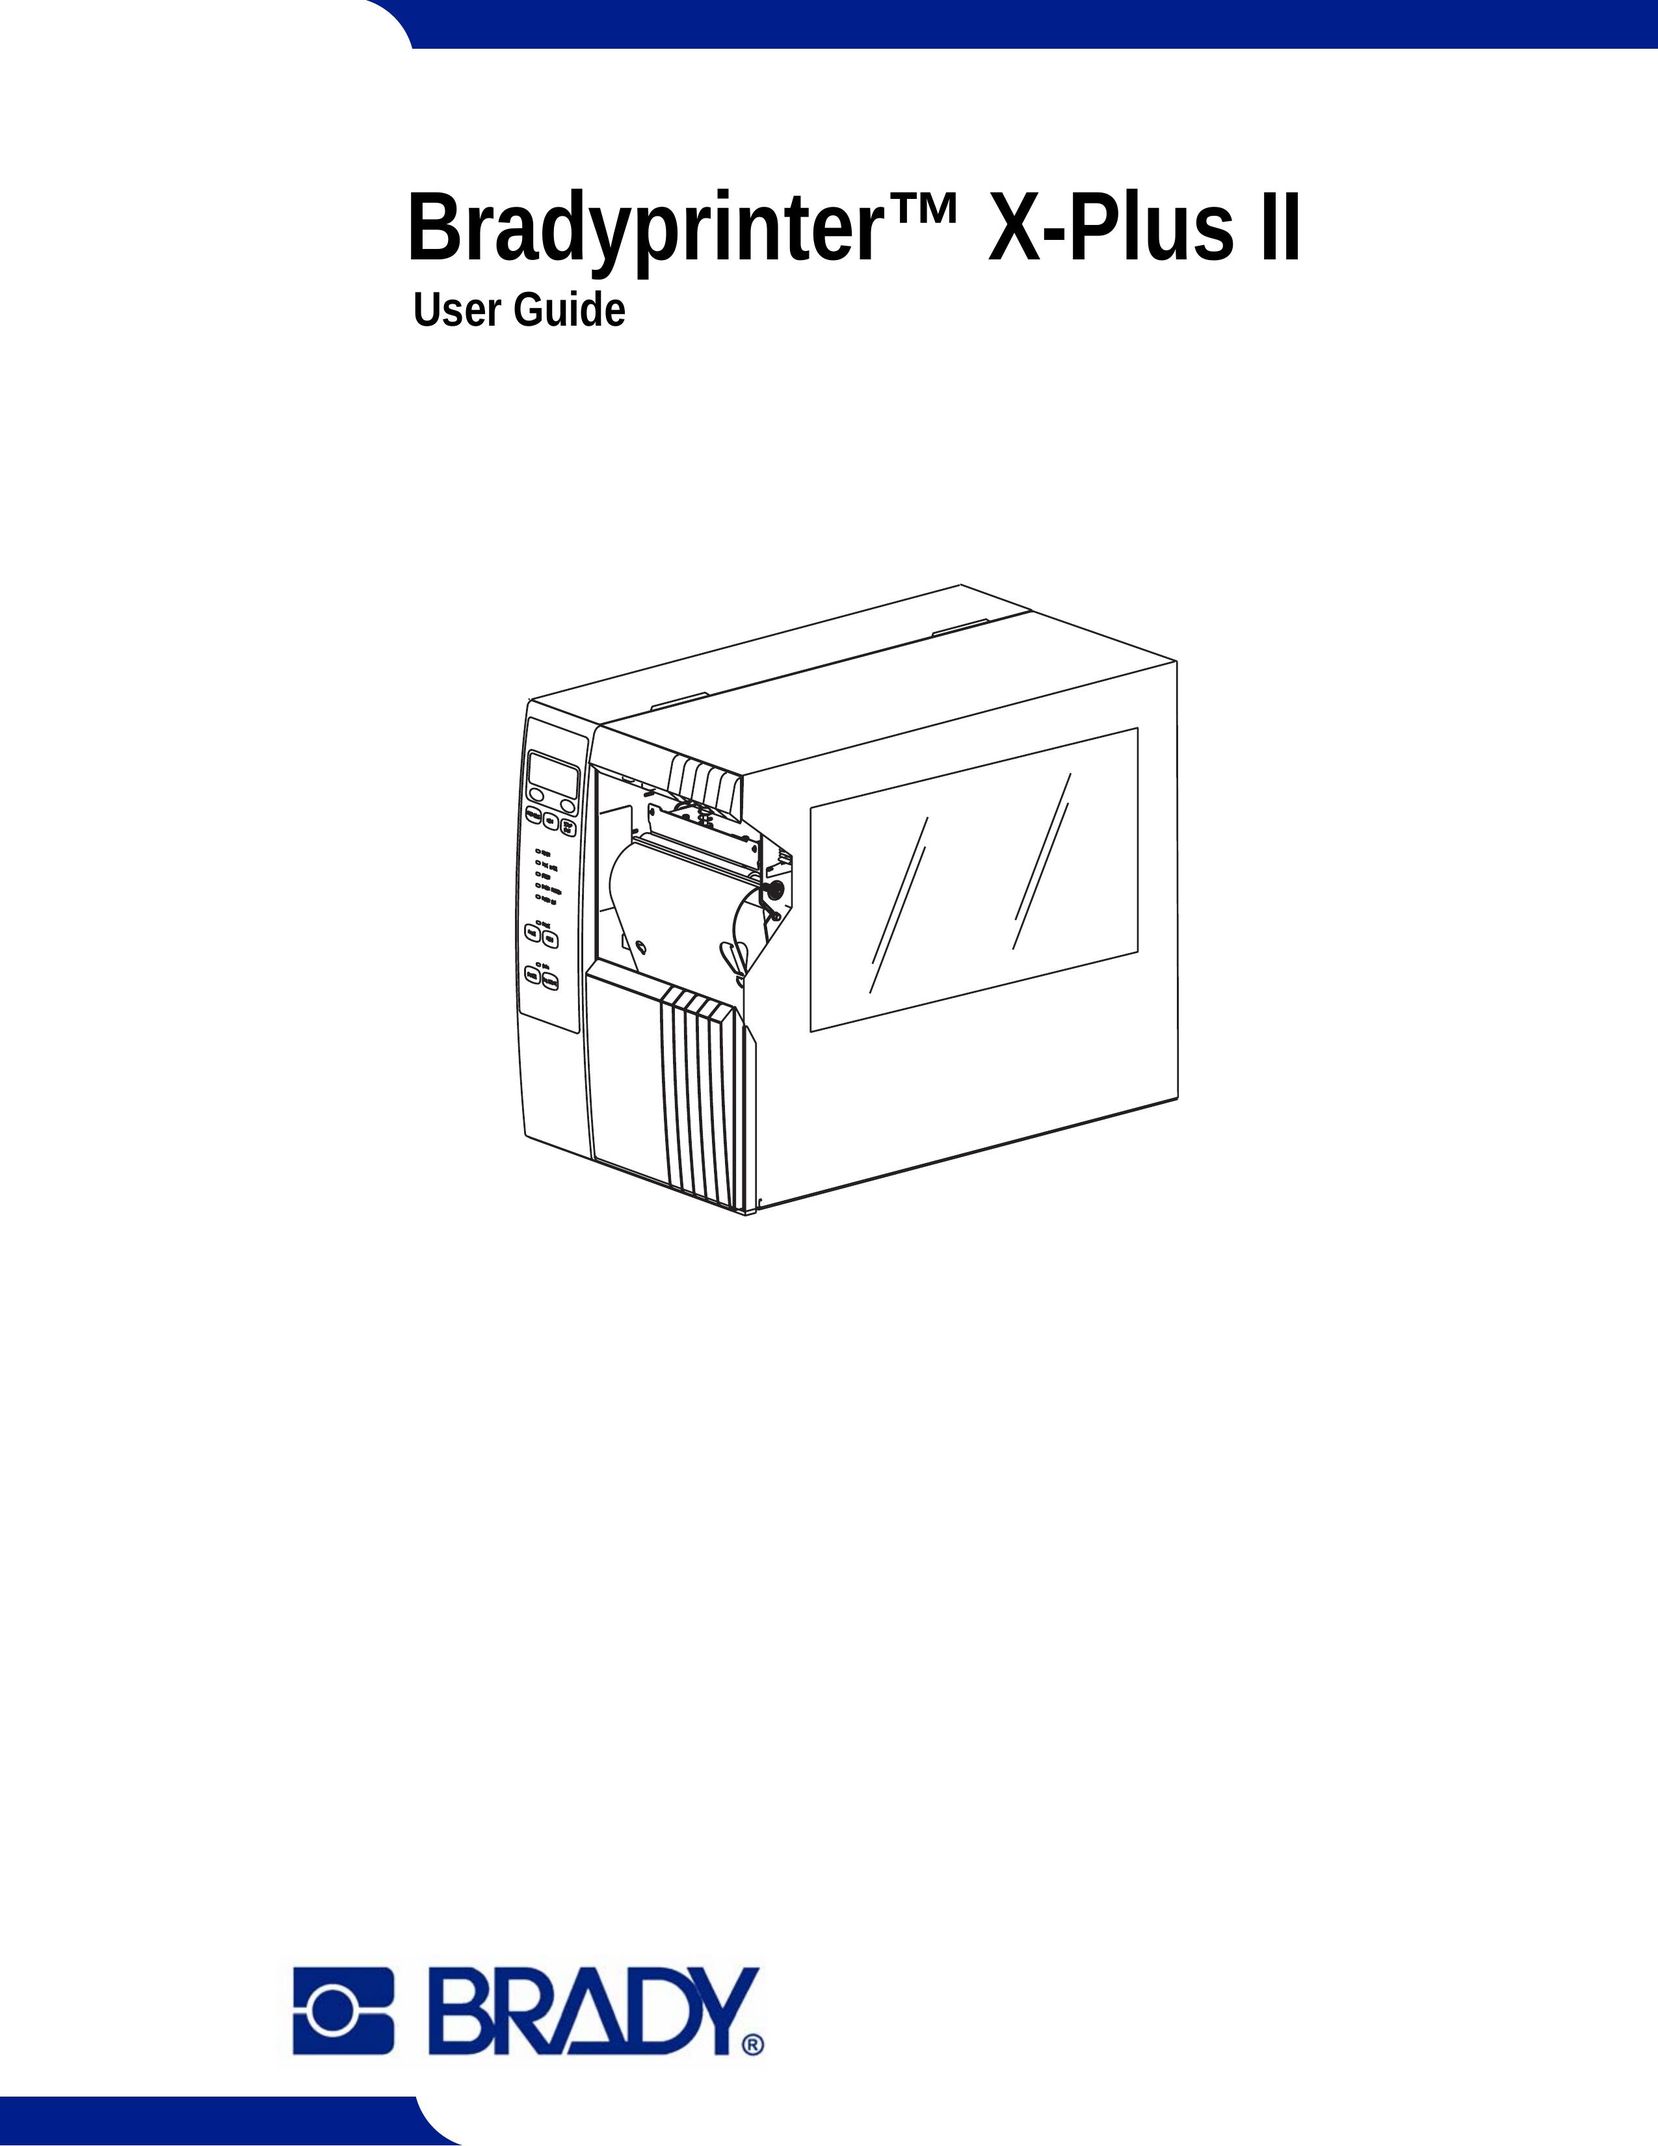 Brady X-Plus II Printer User Manual